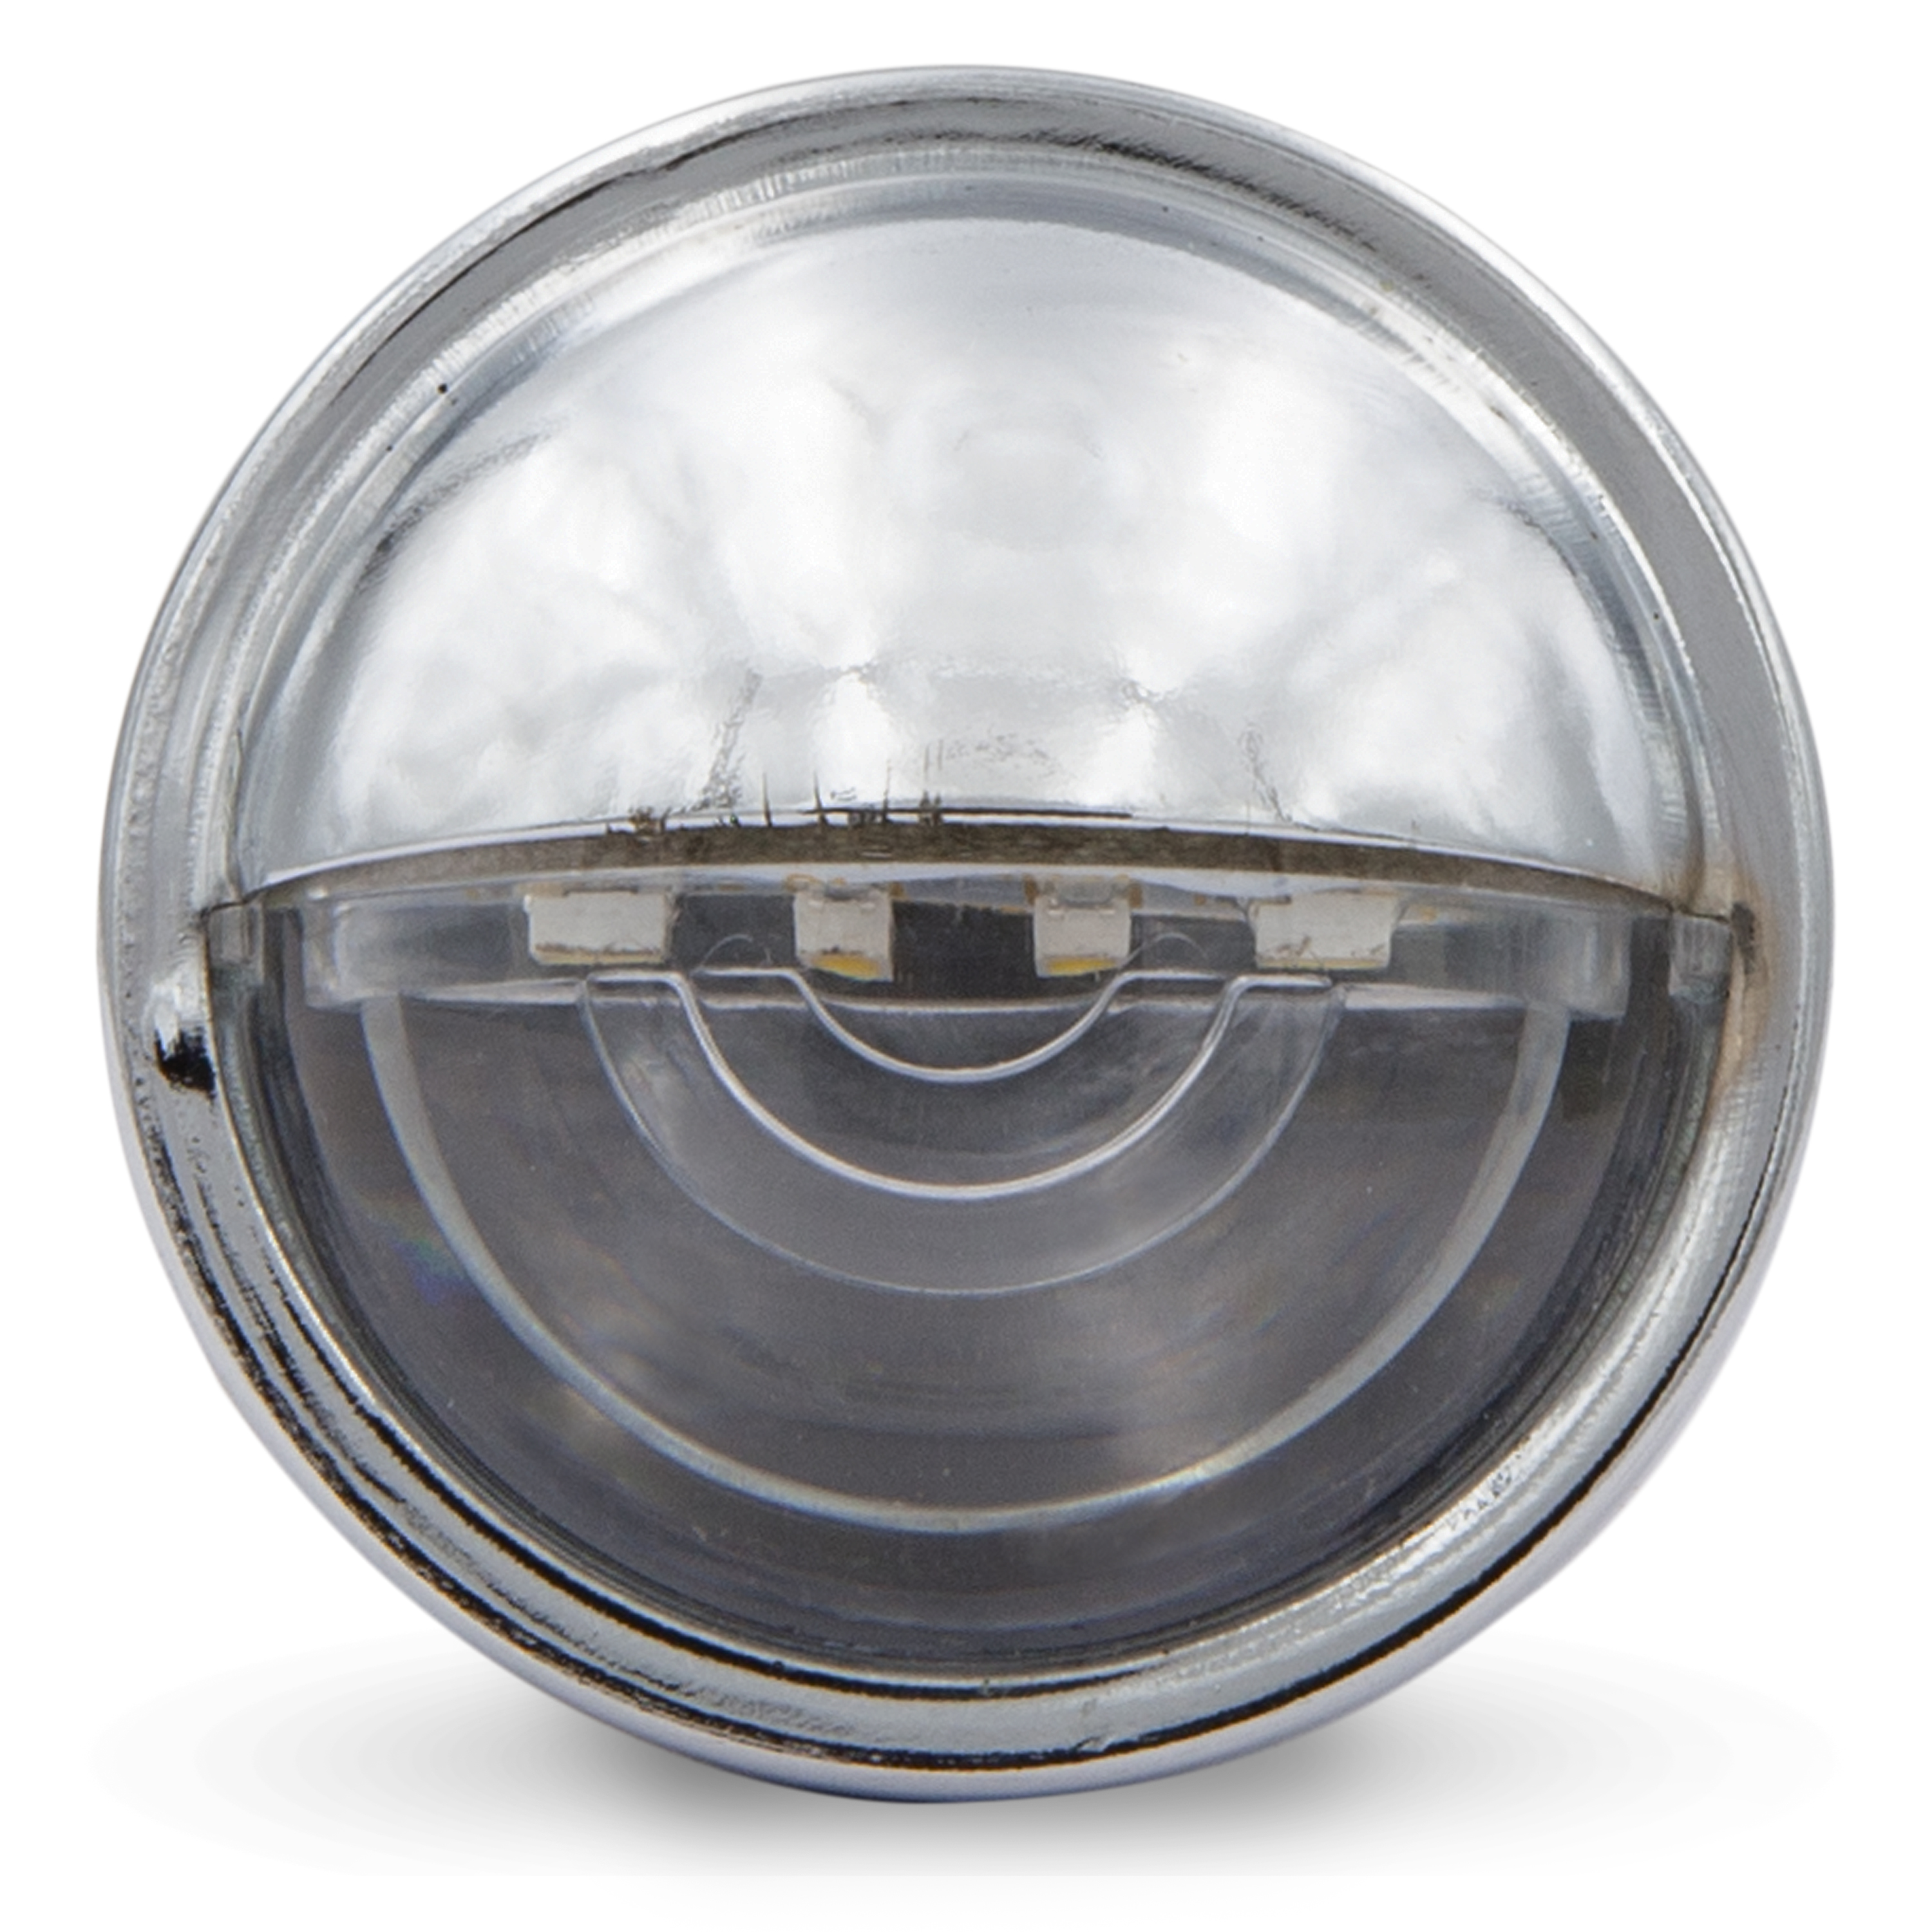 LED License Light 1.5" Round With Stainless Steel Chrome Bezel